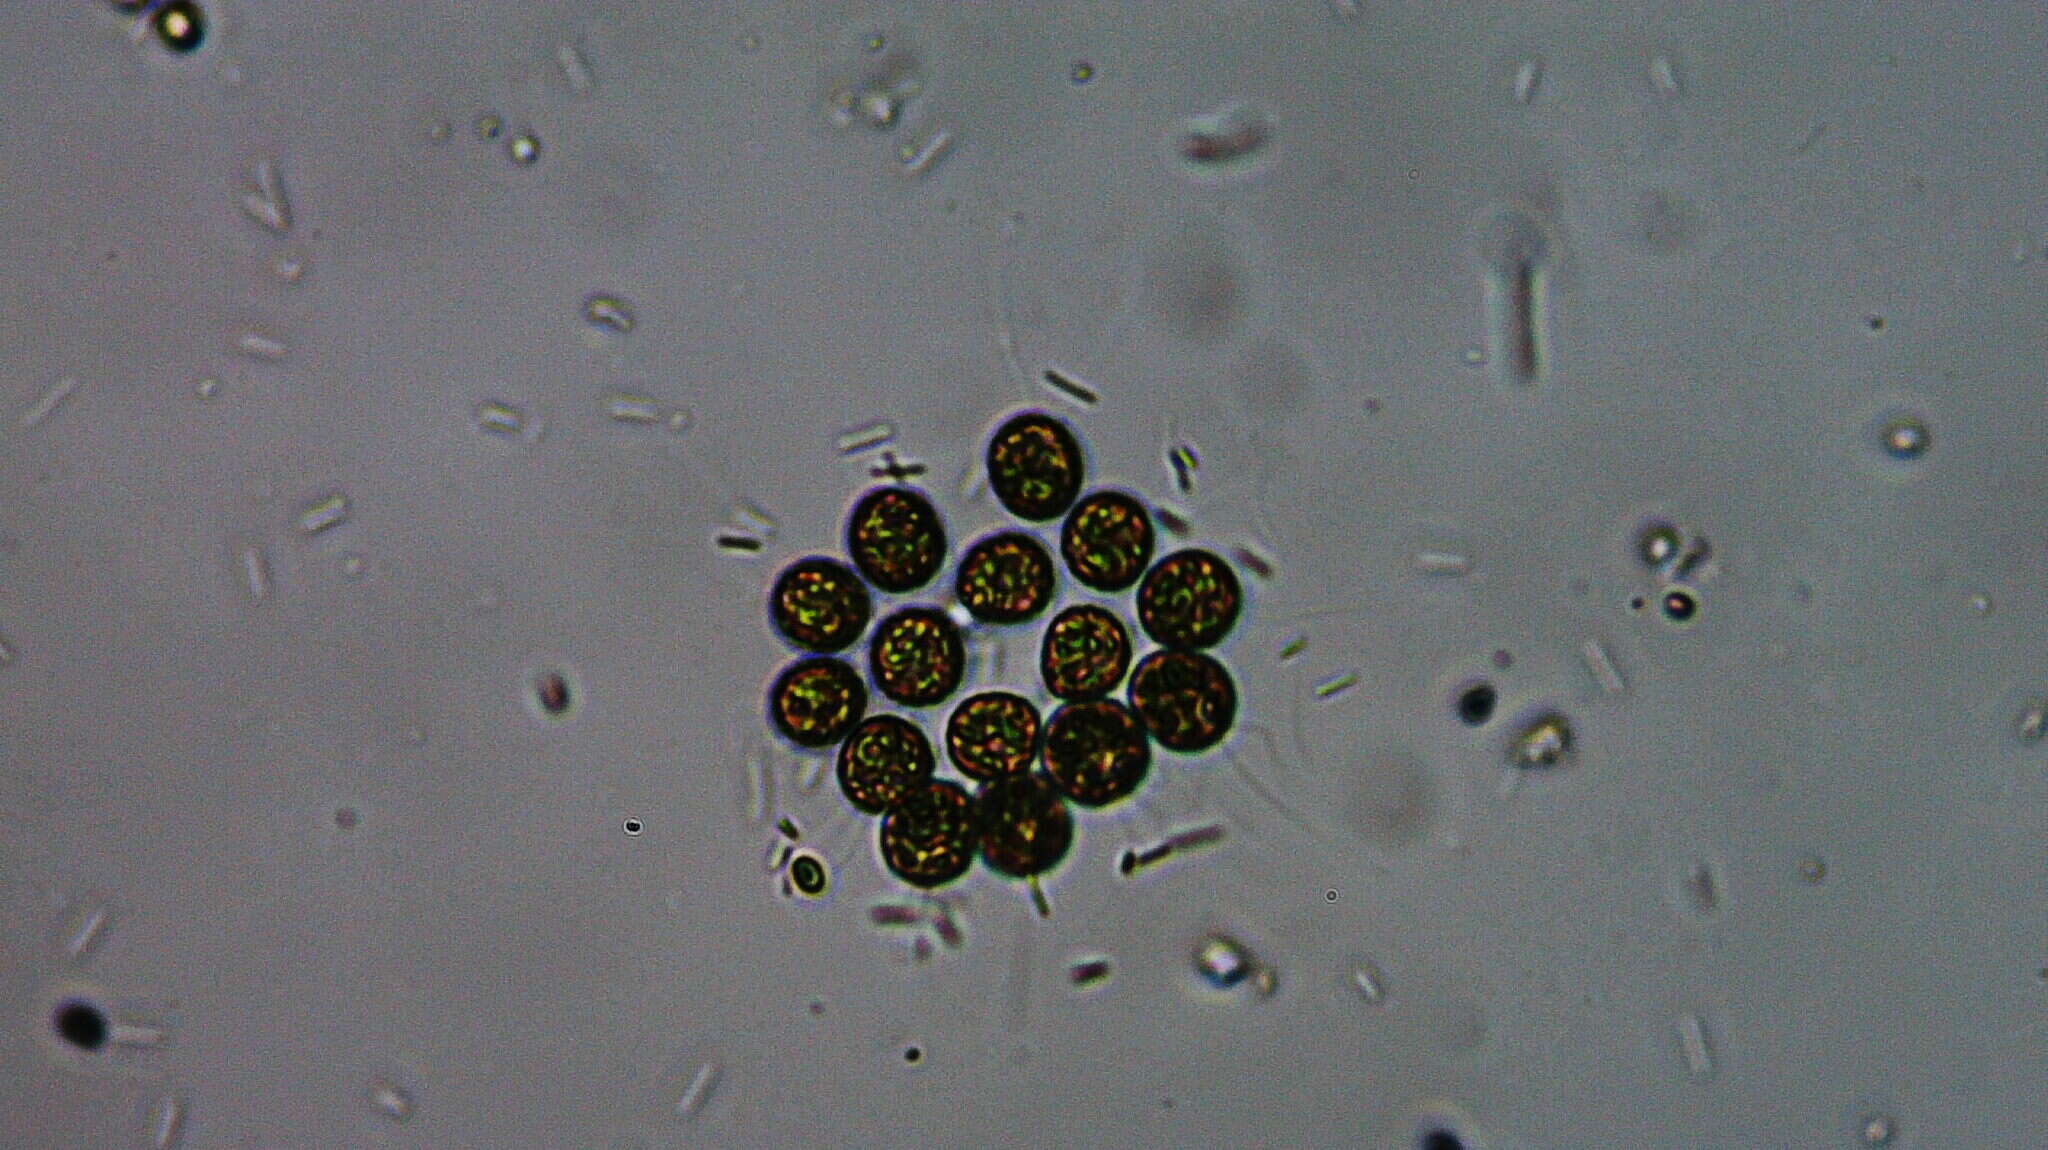 gonium under microscope